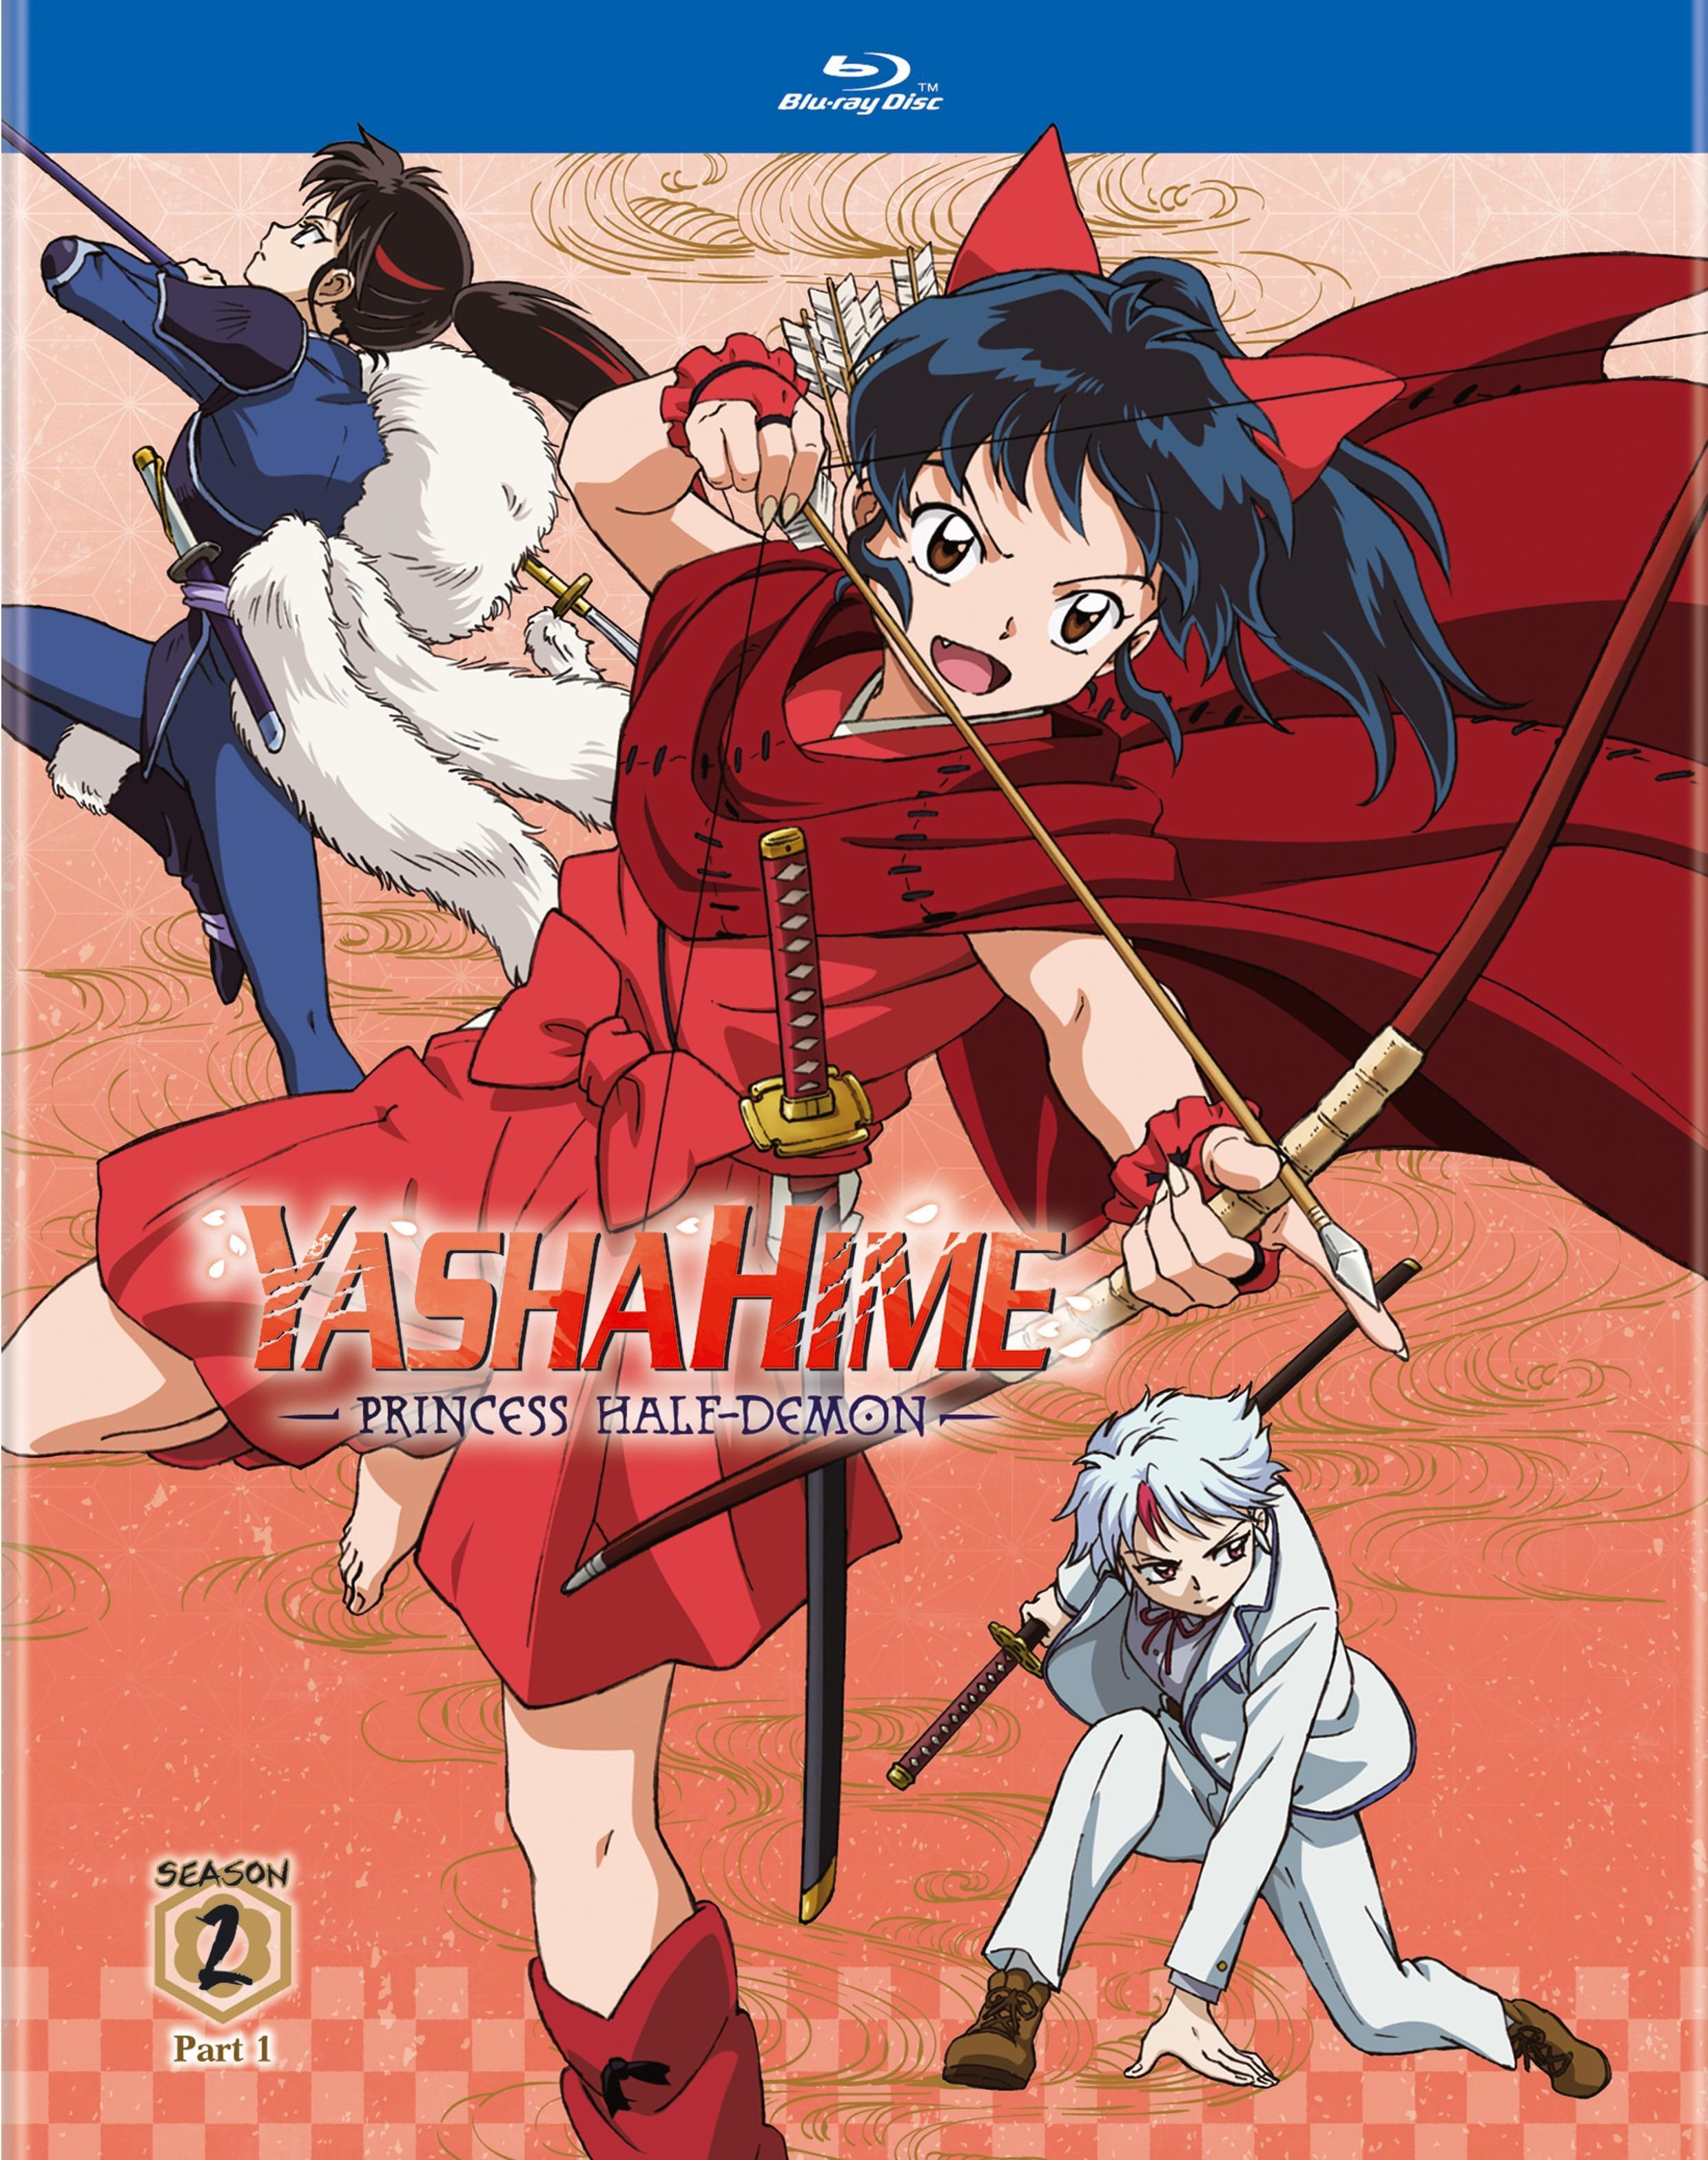 Yashahime: Princess Half-Demon - Rotten Tomatoes